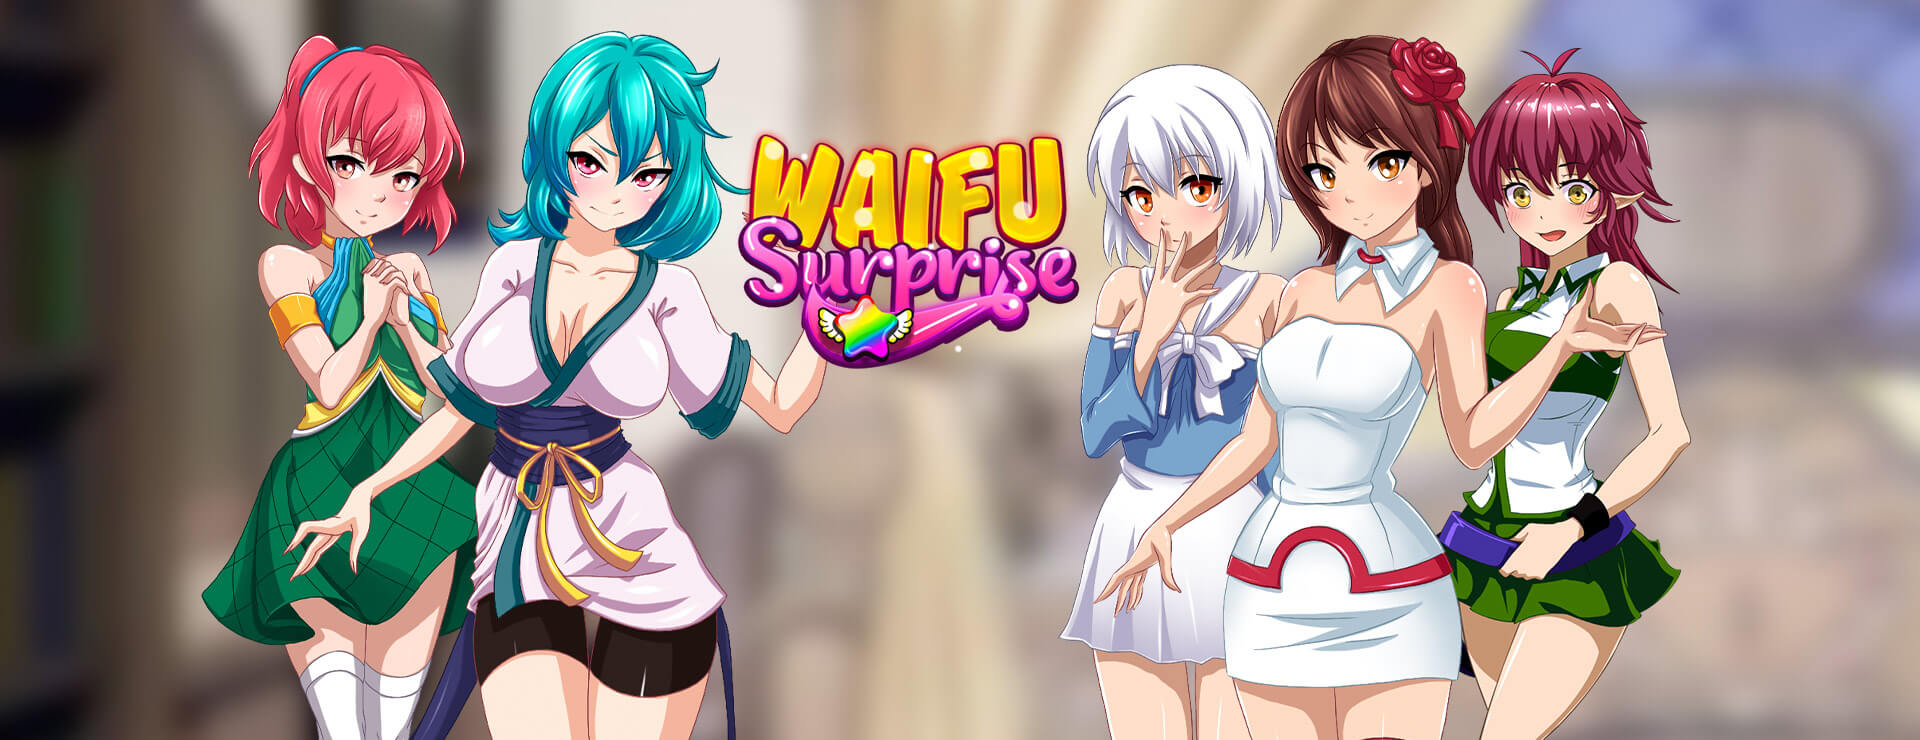 Waifu Surprise - Action Adventure Game